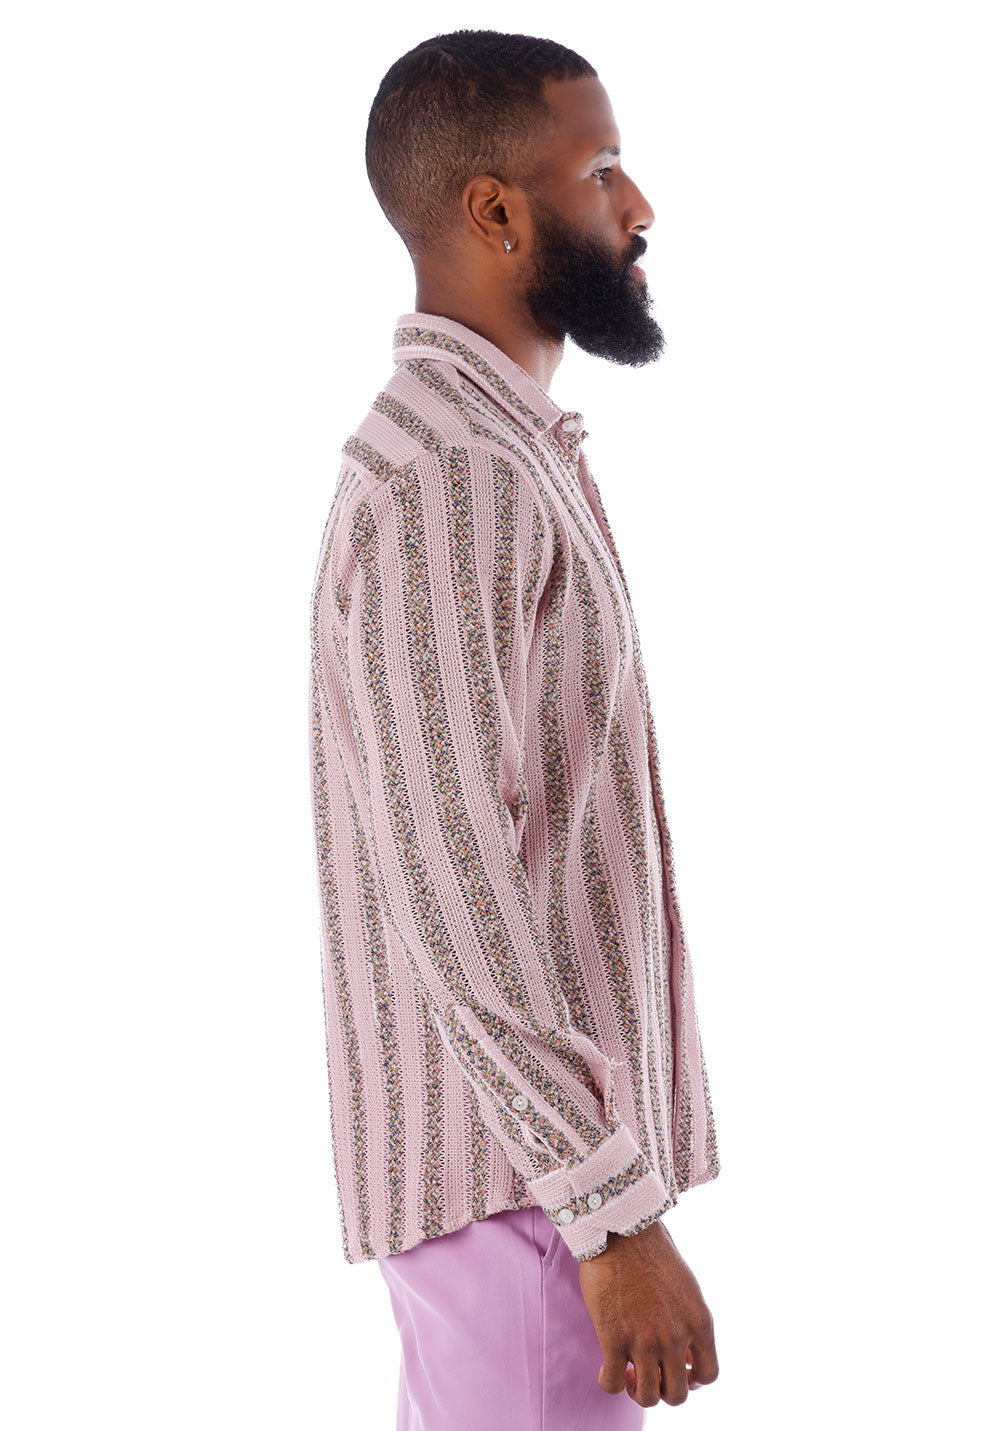 BARABAS Men's Knitted Fabric Button Down Long Sleeve Shirt 4B42 Purple